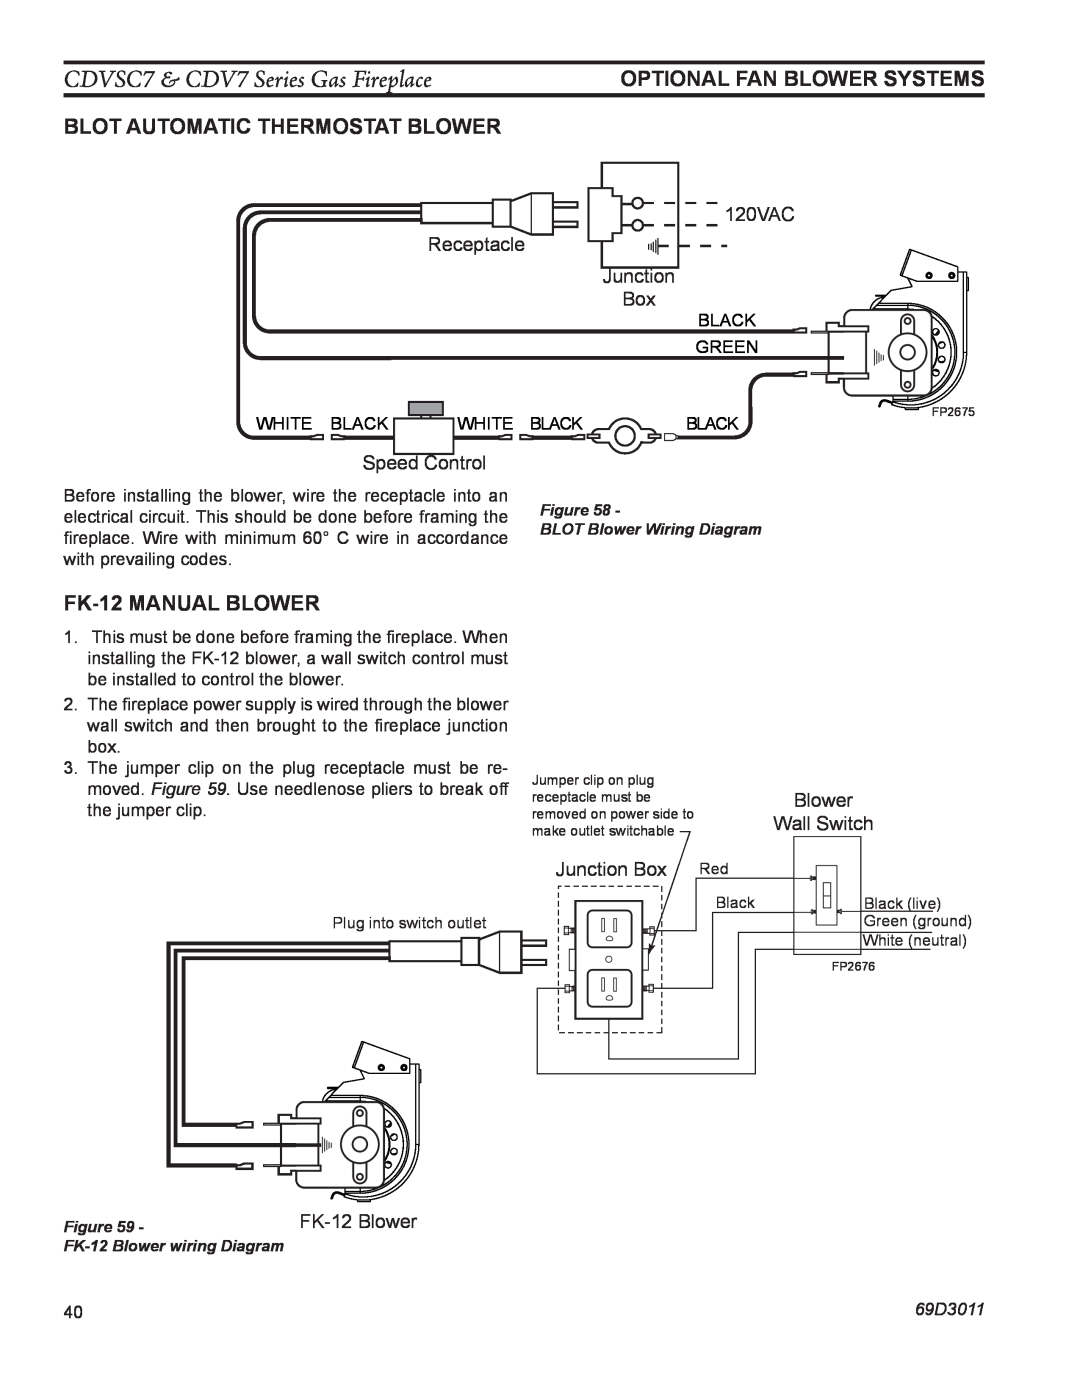 Monessen Hearth CDV7 manual Blot Automatic Thermostat Blower, FK-12MANUAL BLOWER, Optional Fan Blower Systems, FK-12Blower 